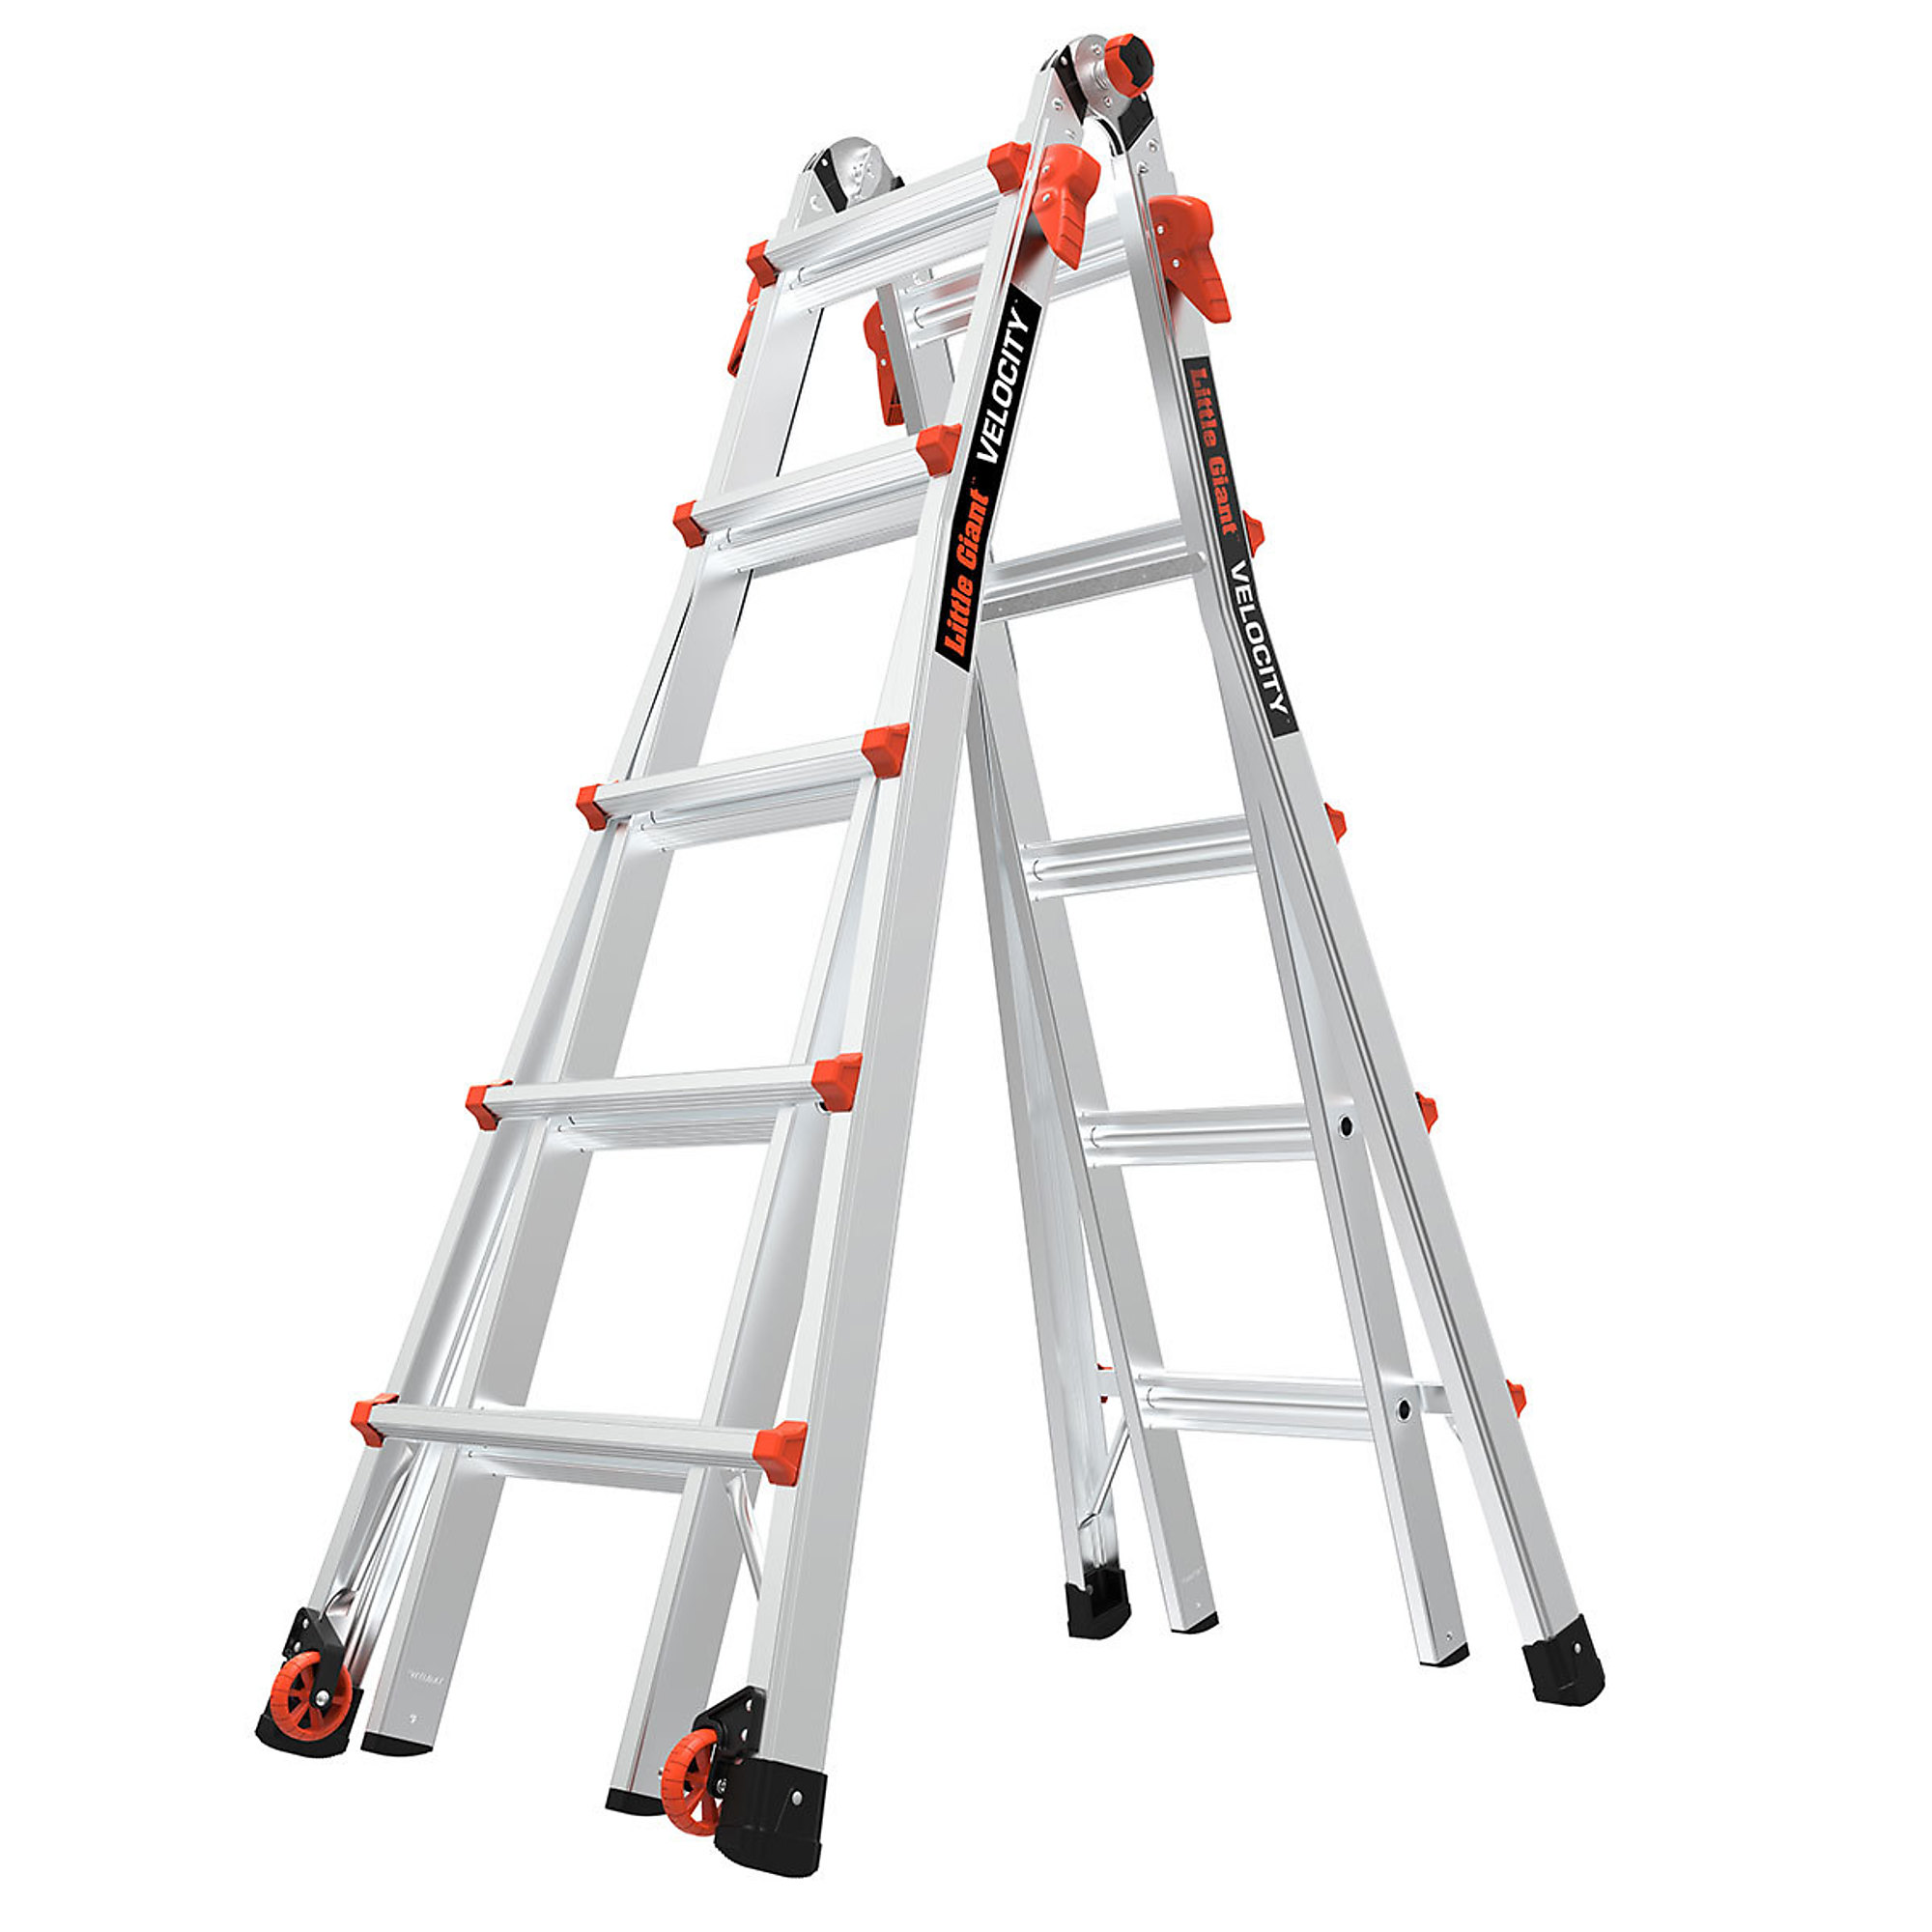 VELOCITY 22 300lb Alum Articulated Extend Ladder, Height 22 ft, Capacity 300 lb, Material Aluminum, Model - Little Giant Ladder 15422-001